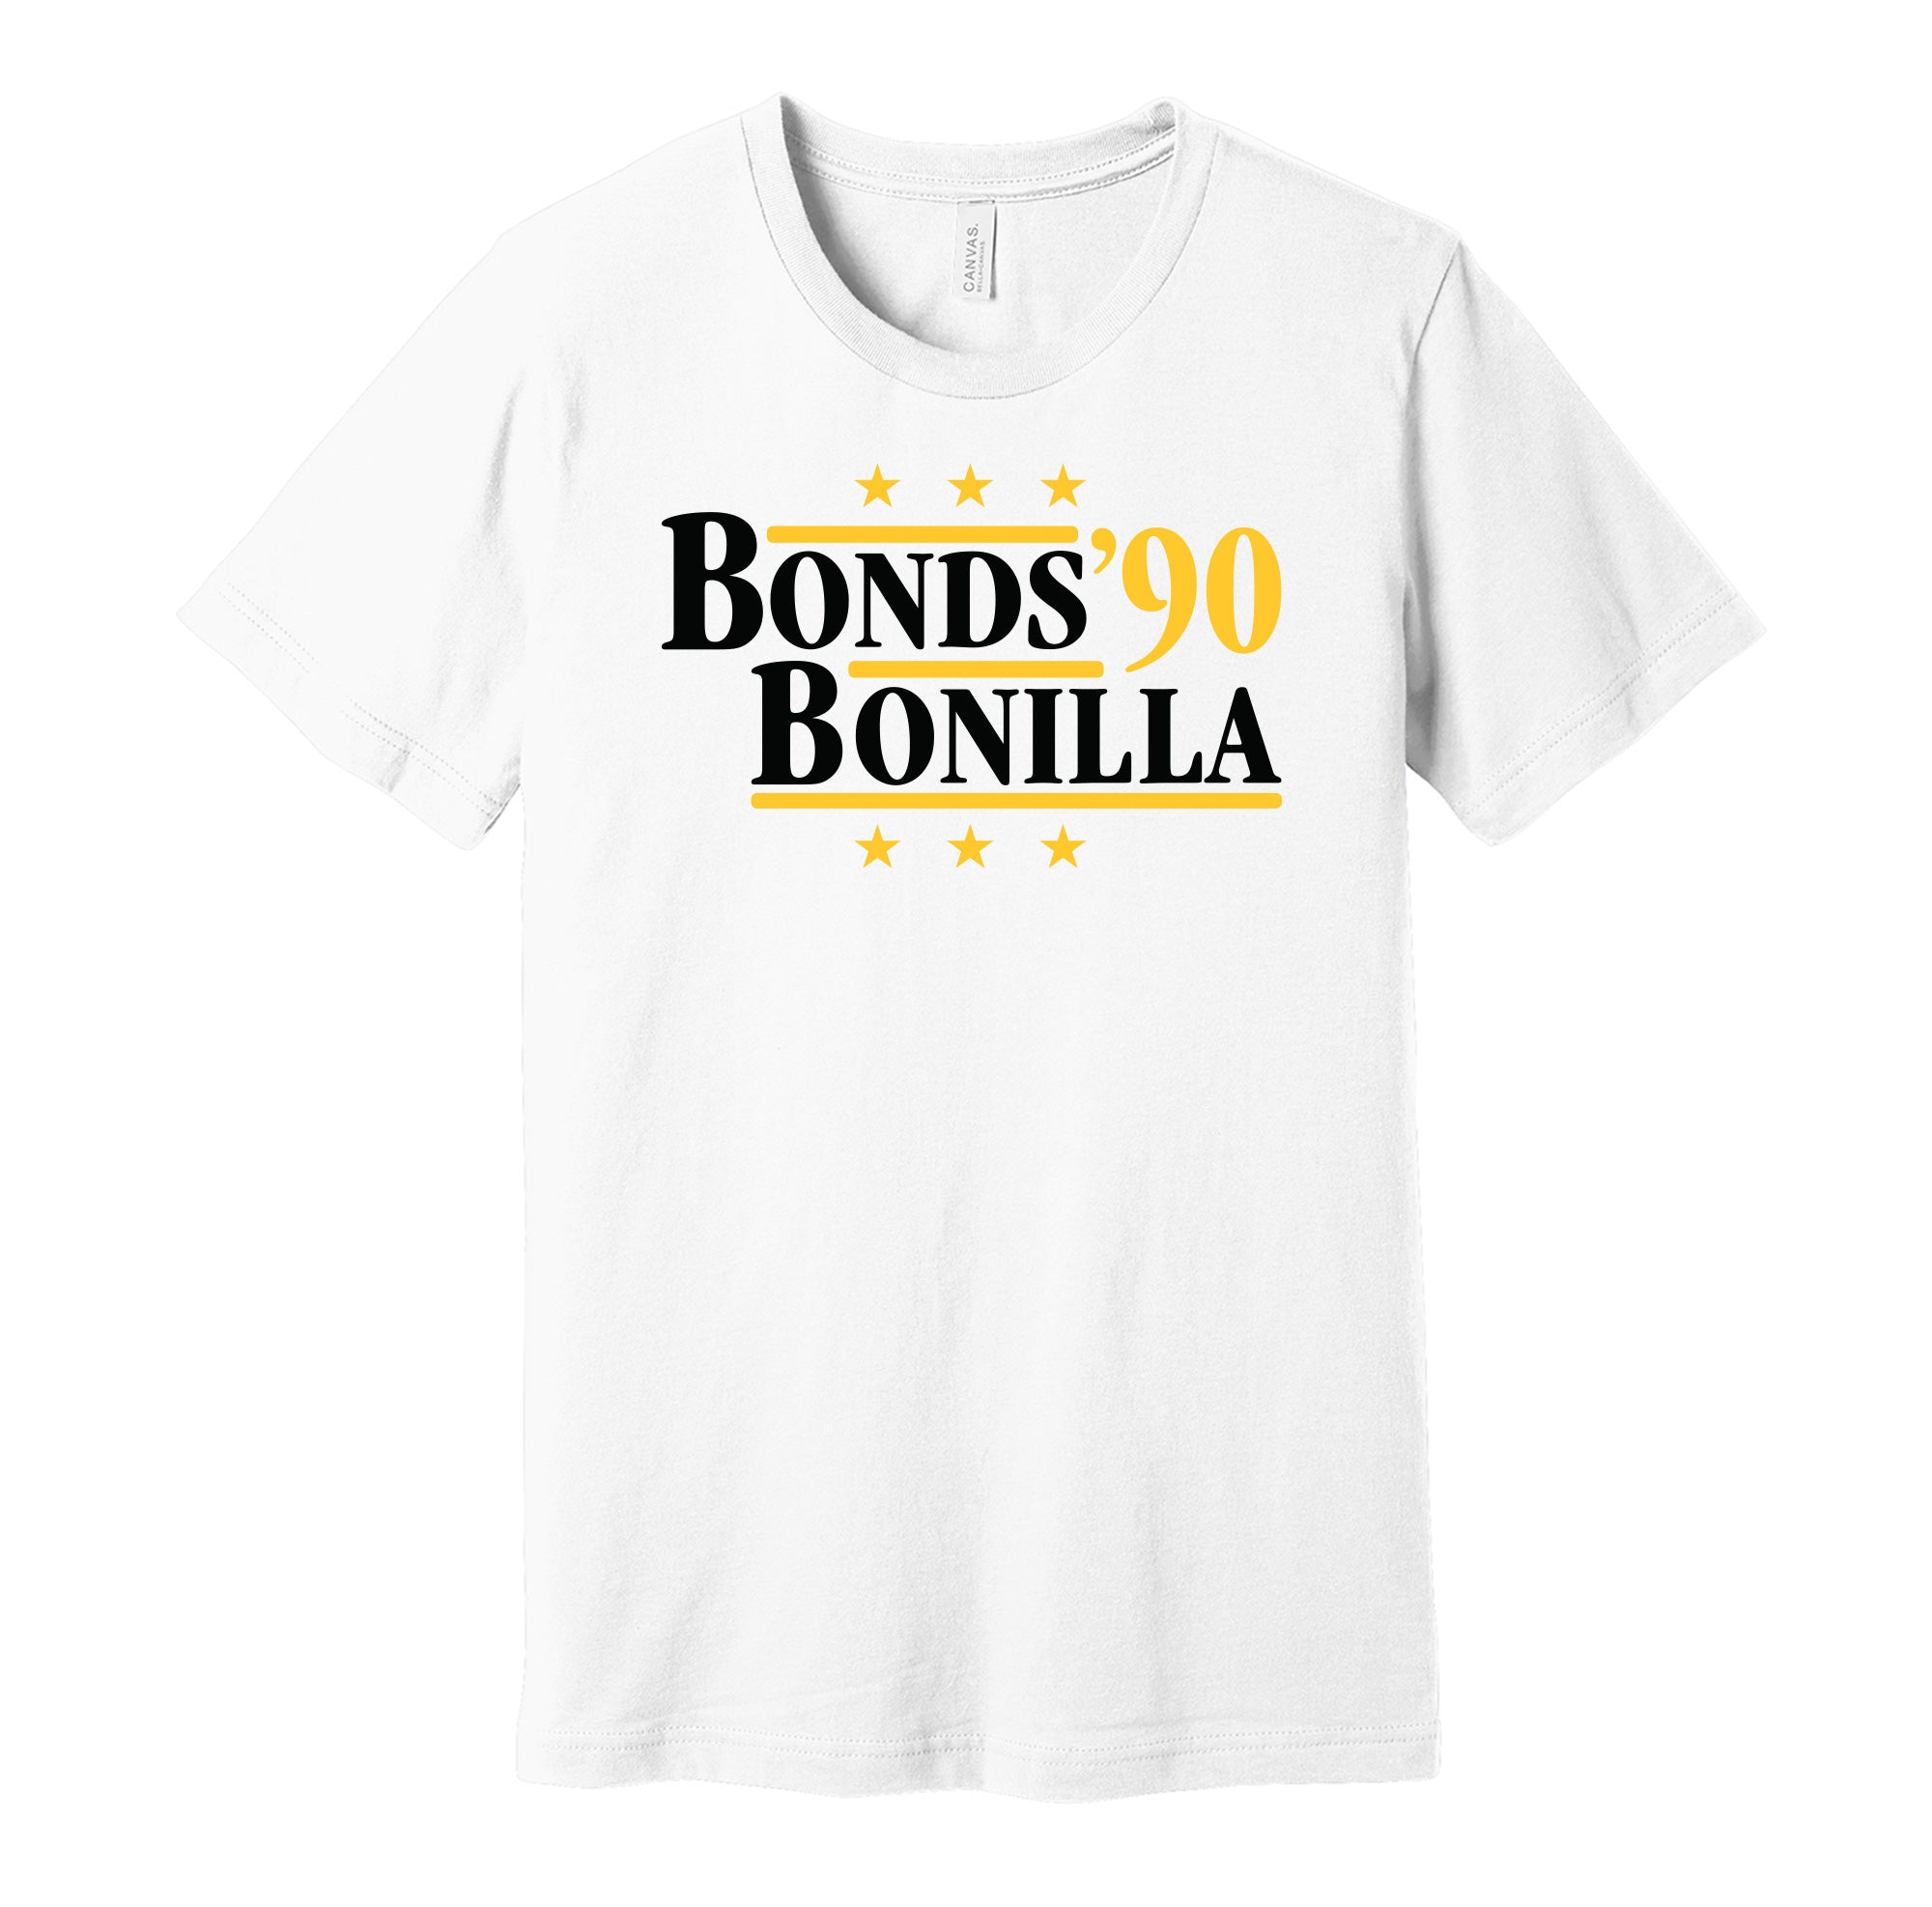 Bobby Bonilla Day July 1st T Shirts, Custom prints store